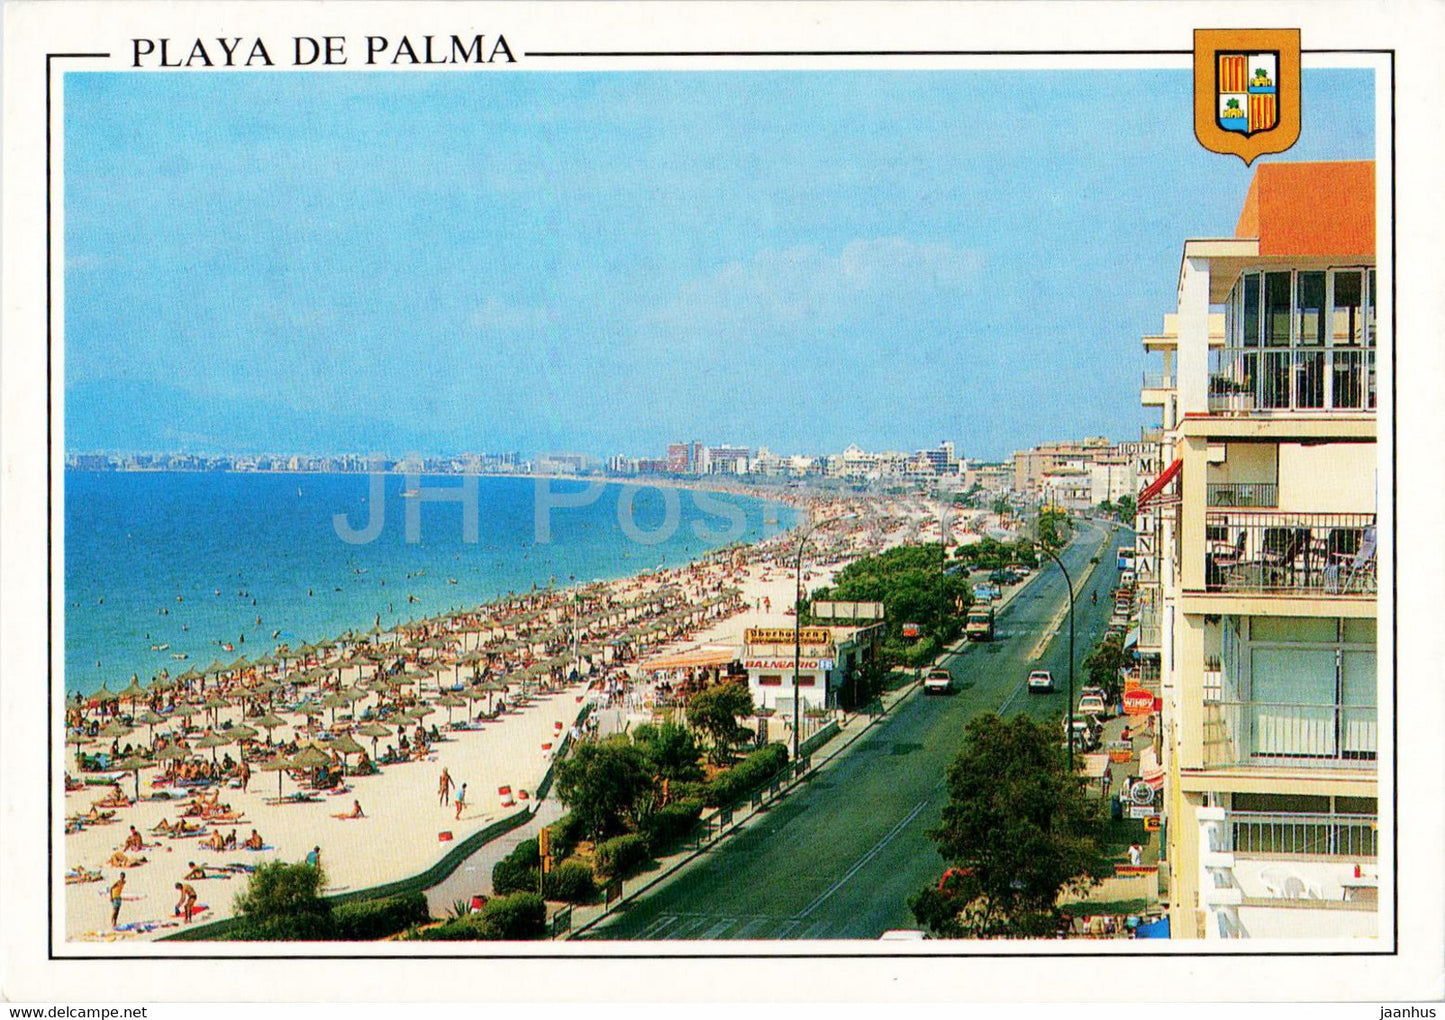 Playa de Palma - Mallorca - 3755 - 1995 - Spain - used - JH Postcards